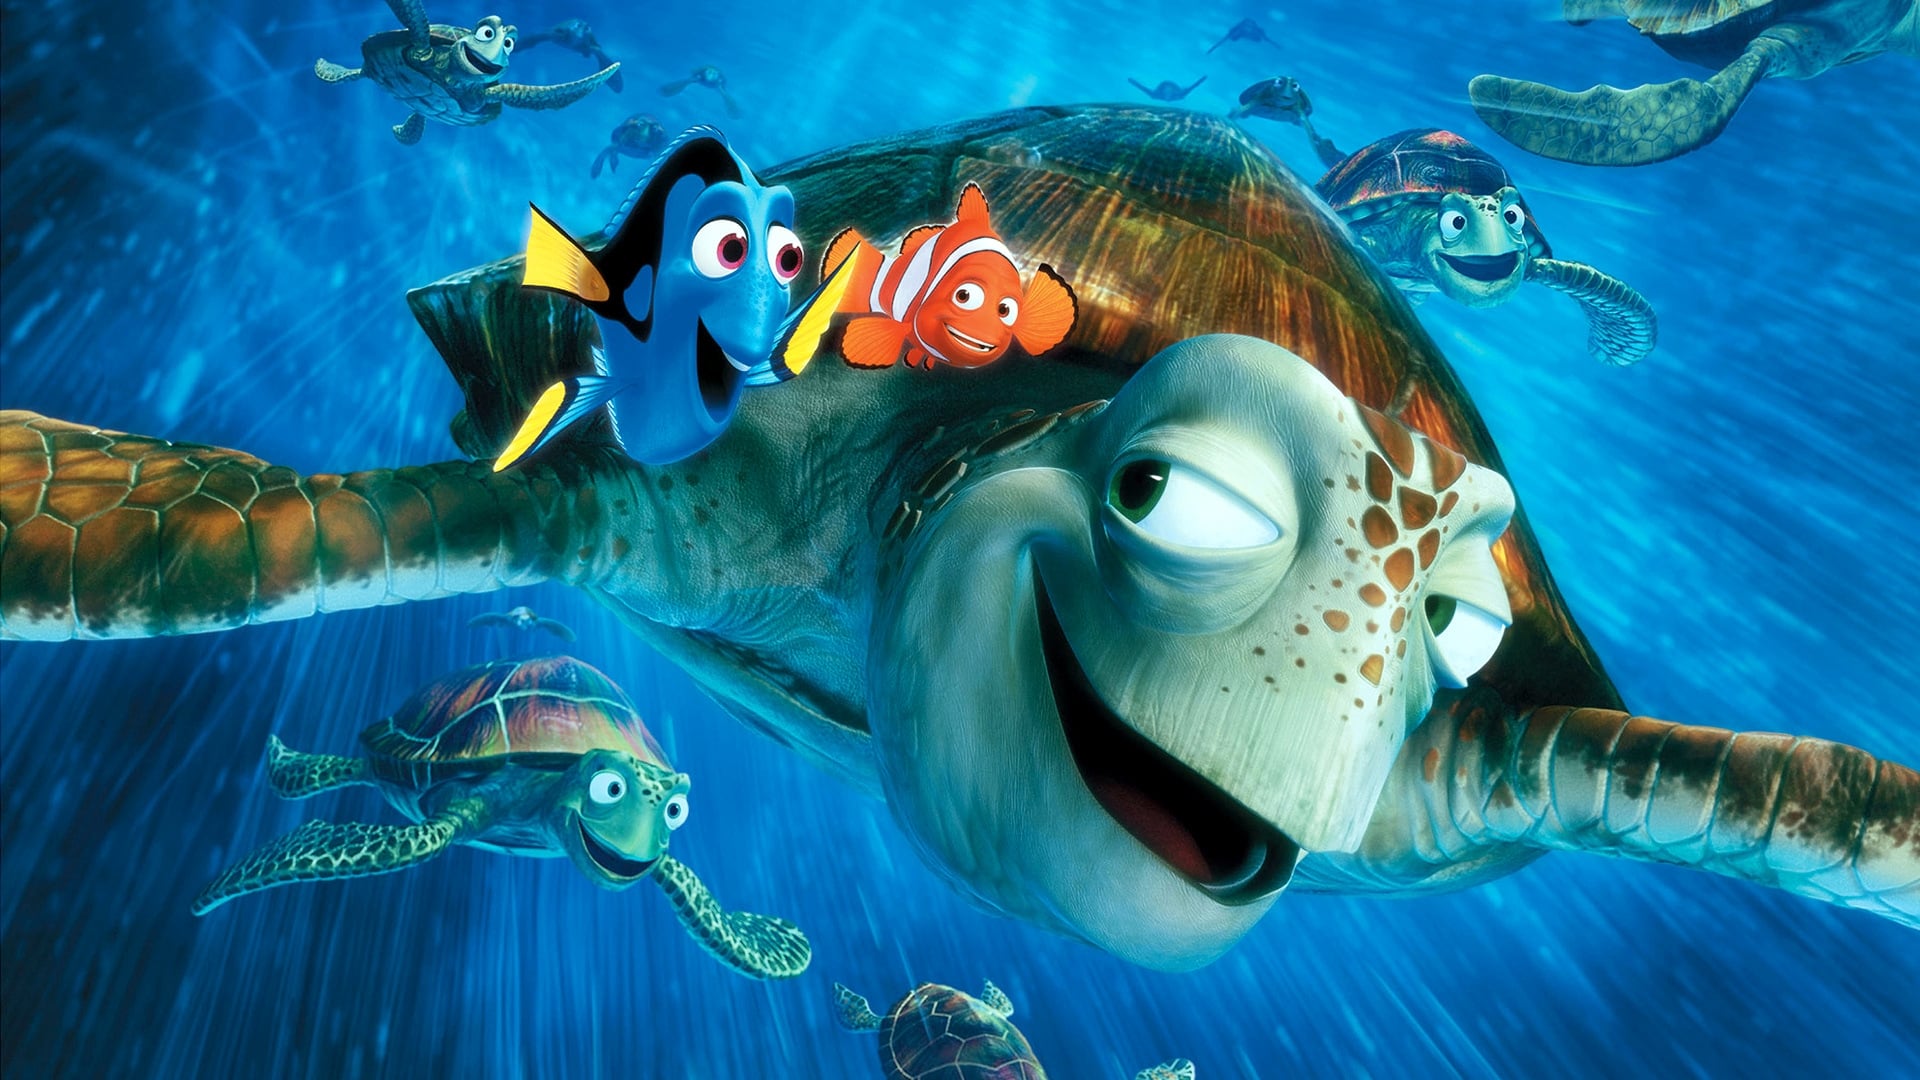 Banner Phim Đi tìm Nemo (Finding Nemo)